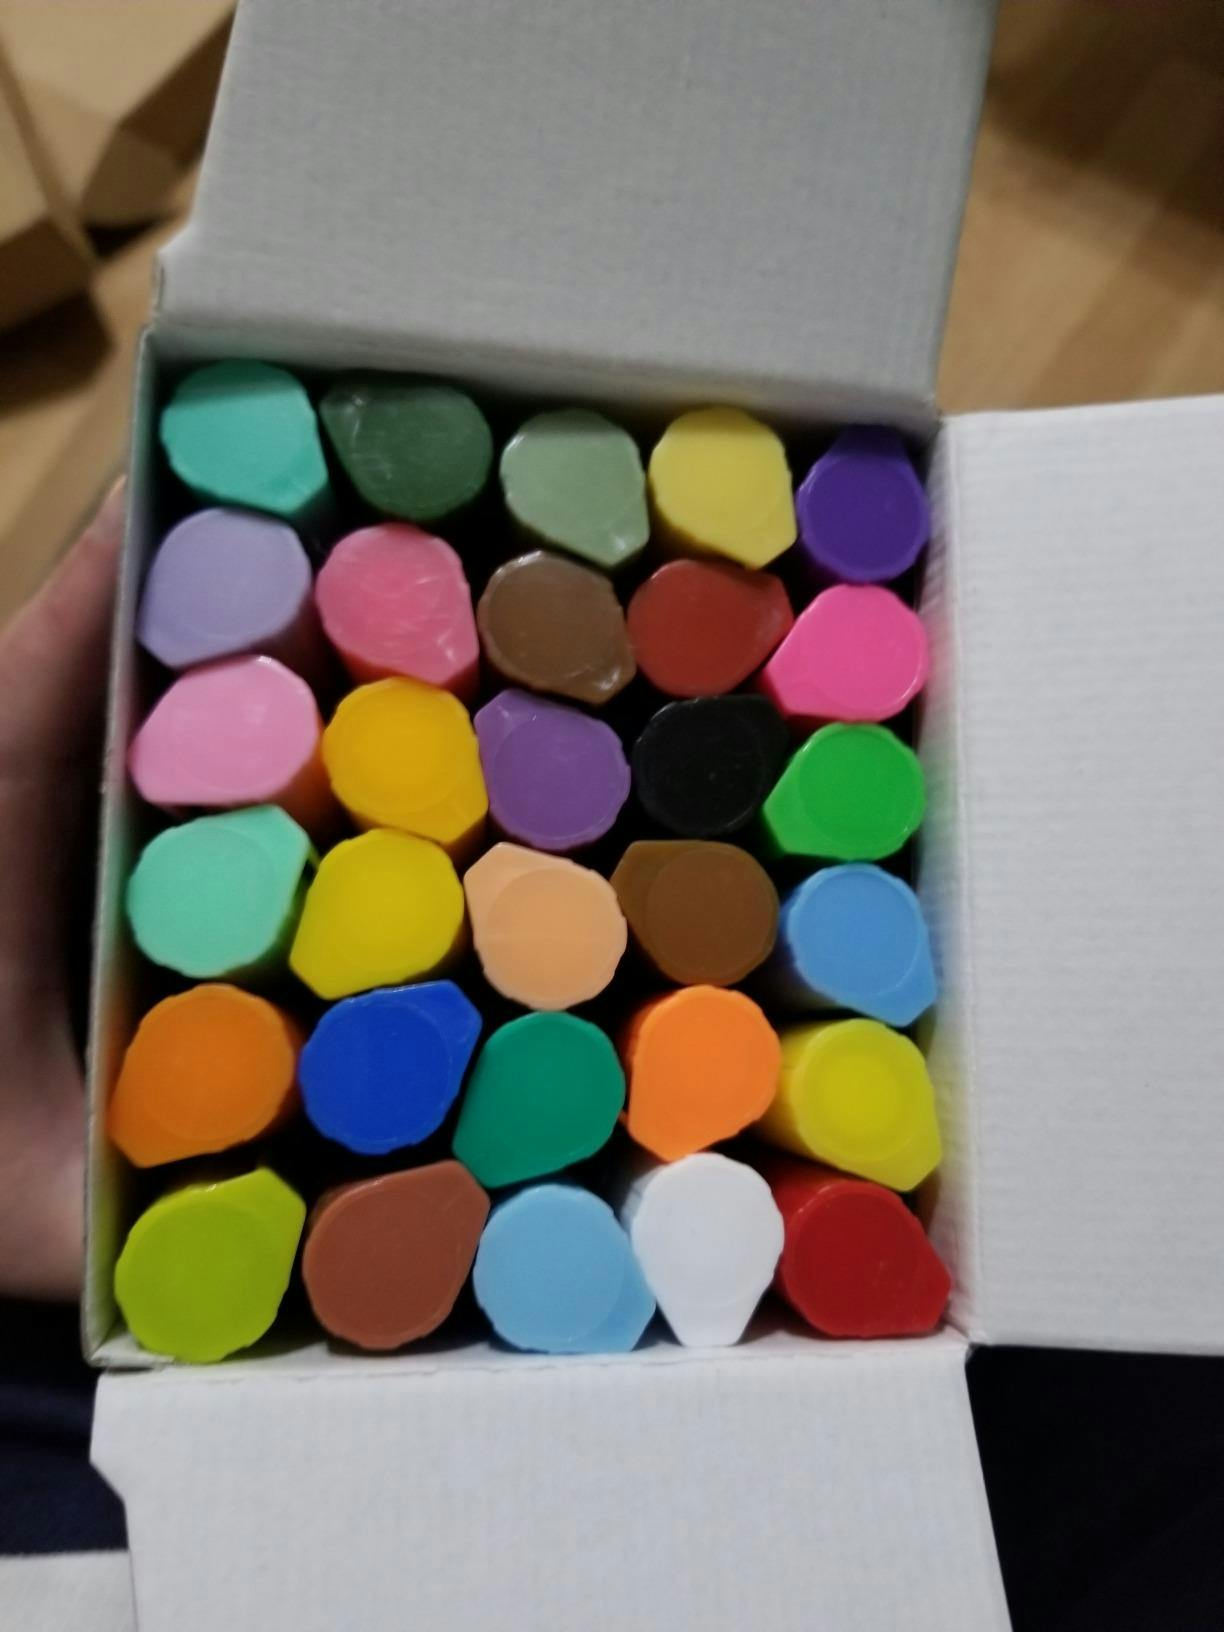 Extra Fine Tip Liquid Chalk Markers (30 Pack 1mm) Pastel + Neon Chalk Pens  - Erasable Dry Erase Marker for Chalkboard, Blackboards